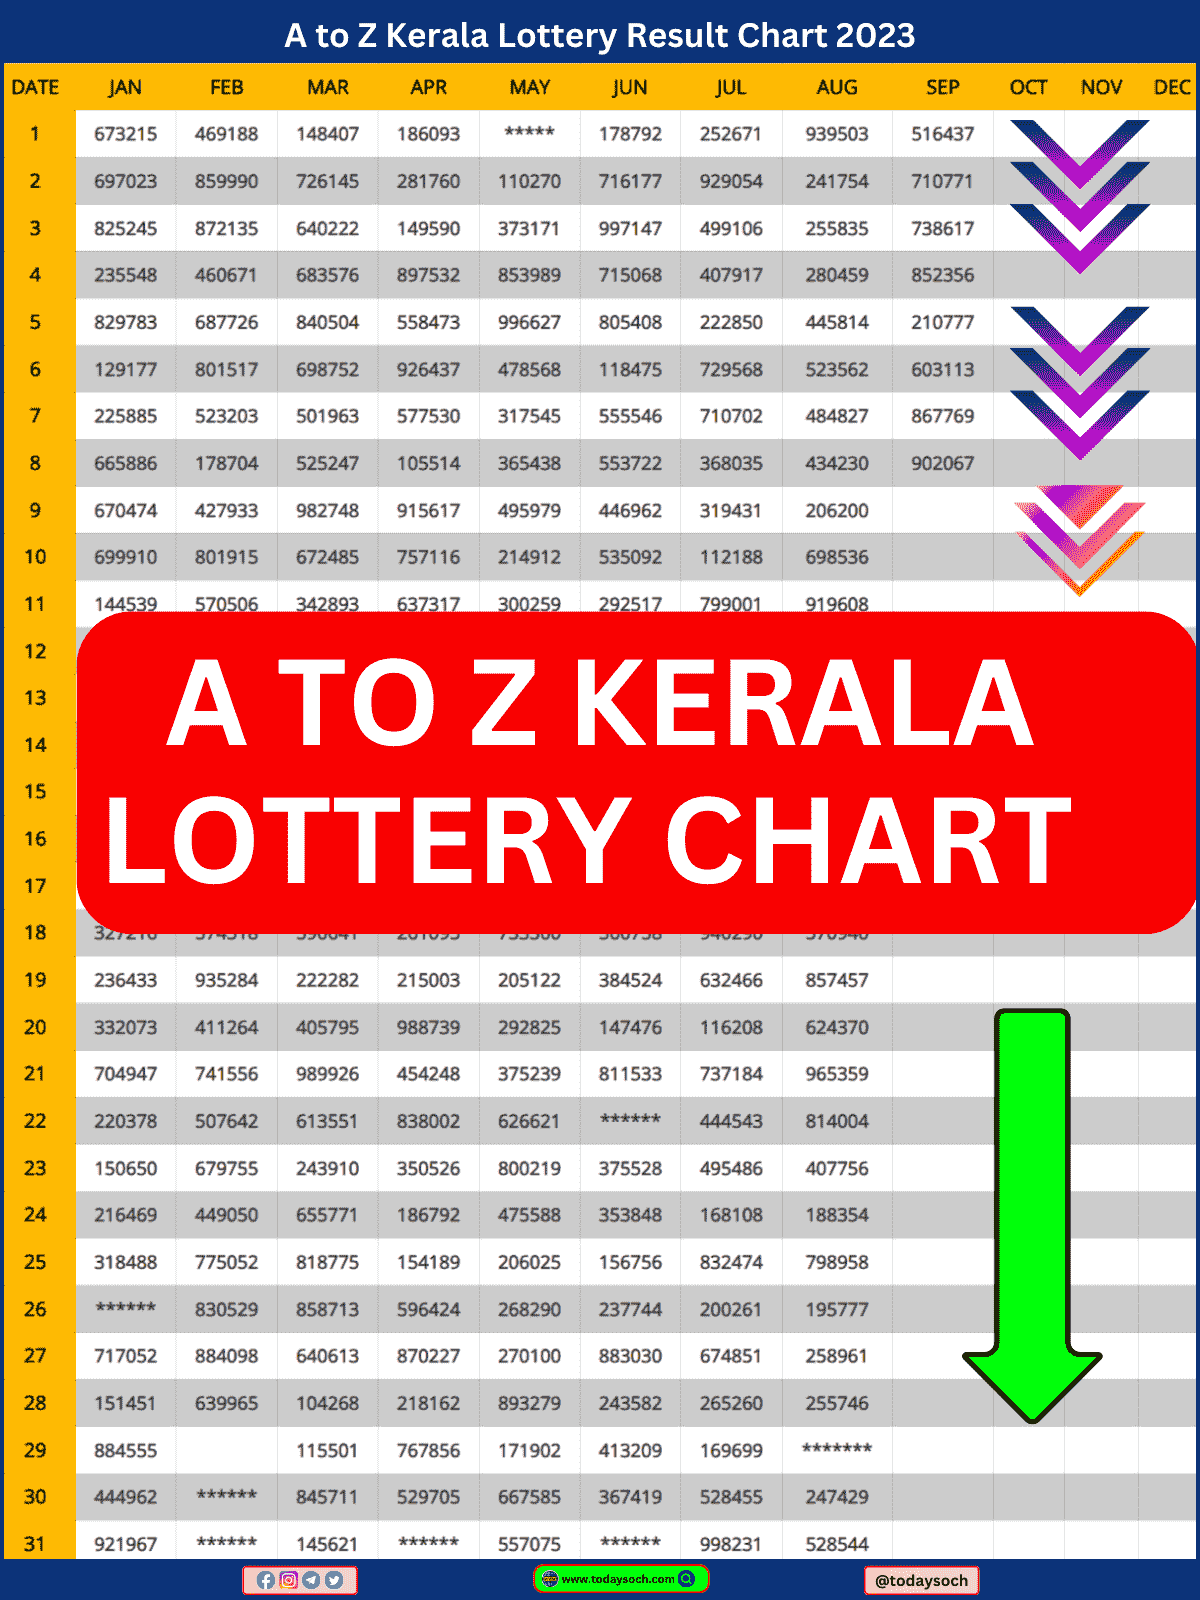 A to Z Kerala Lottery Chart 2023